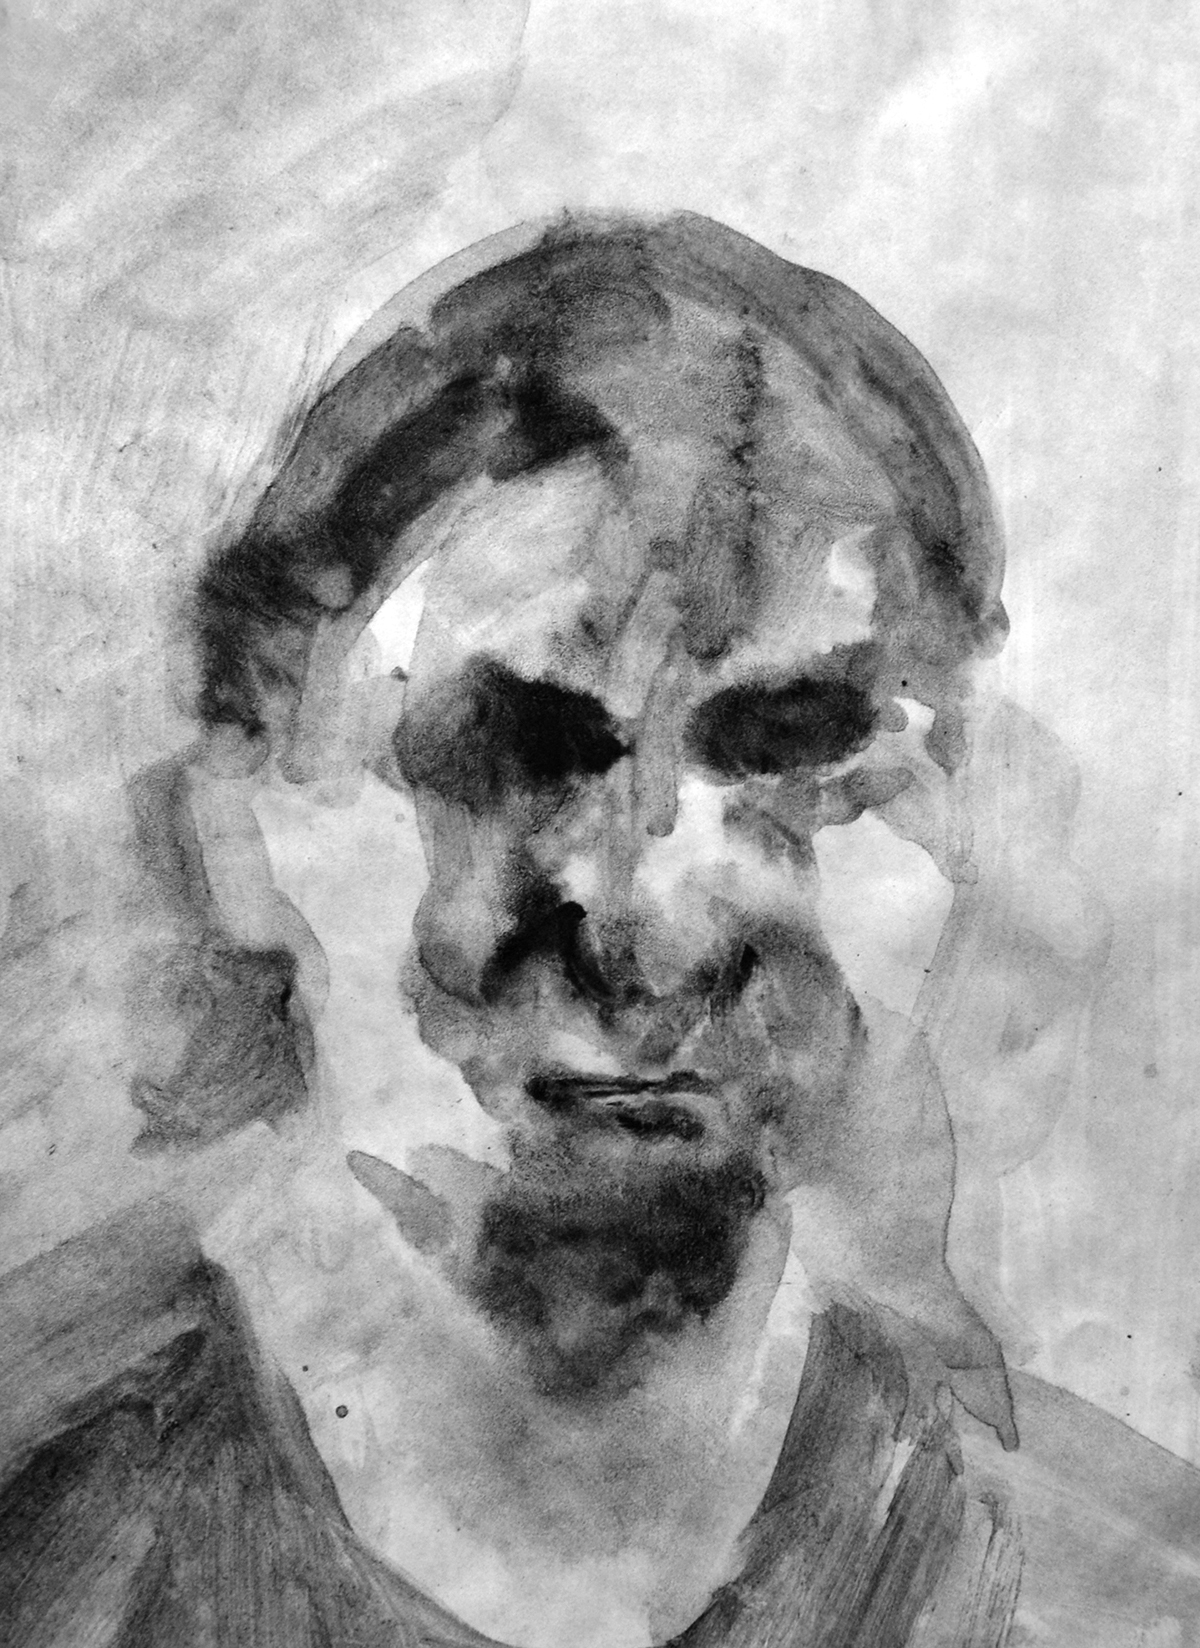 still life oil paint observational crayon portrait charcoal sculpture figure modeling Figure Drawing experimental